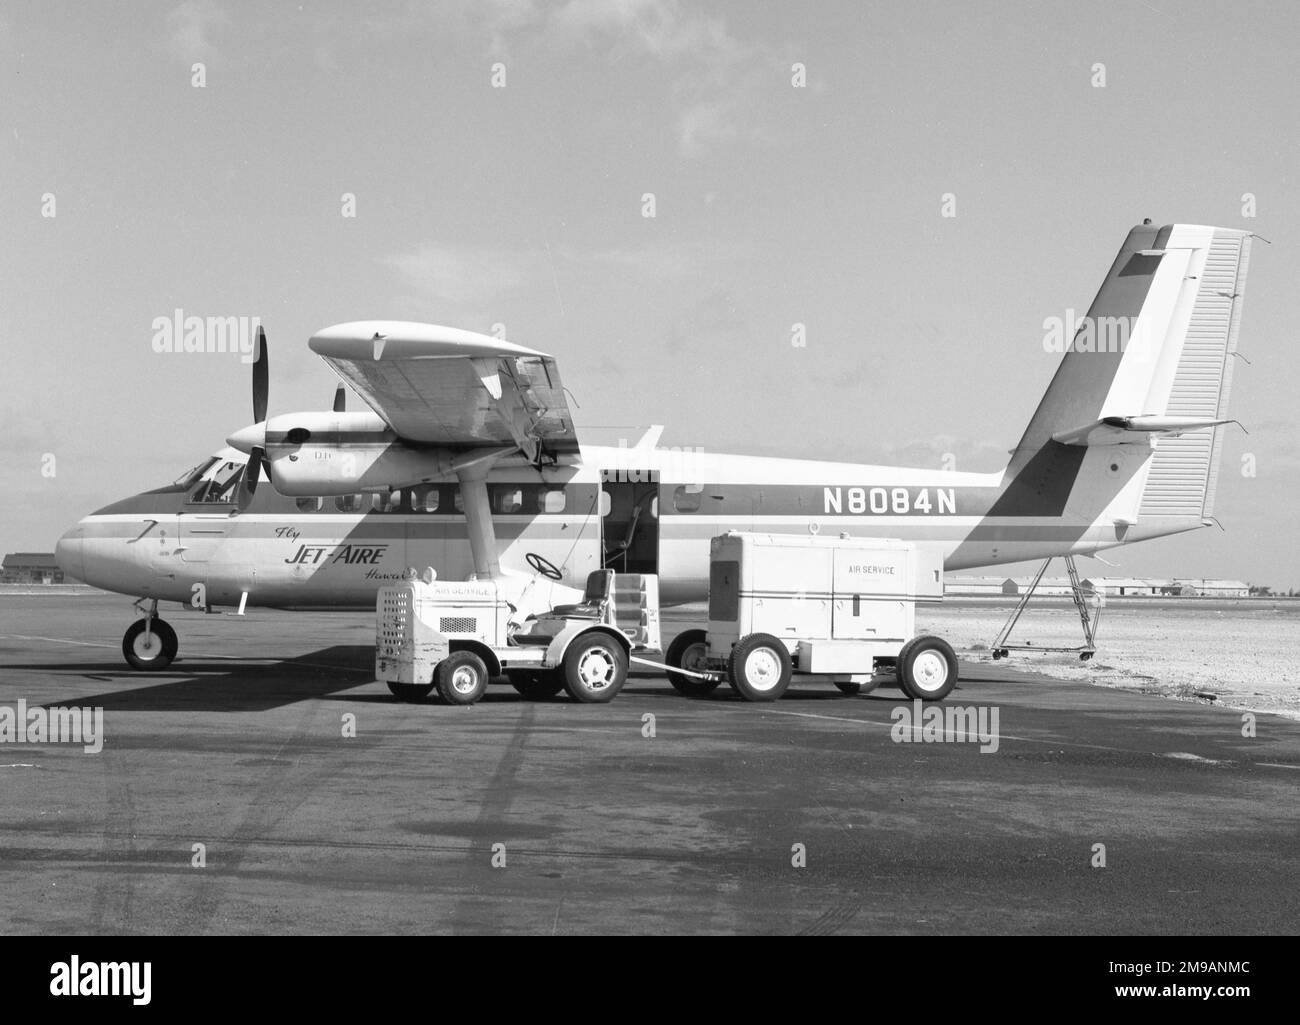 de Havilland Canada DHC-6-100 Twin Otter N8084N (msn 1578TB7), of Hawaii Jet-Aire. Stock Photo